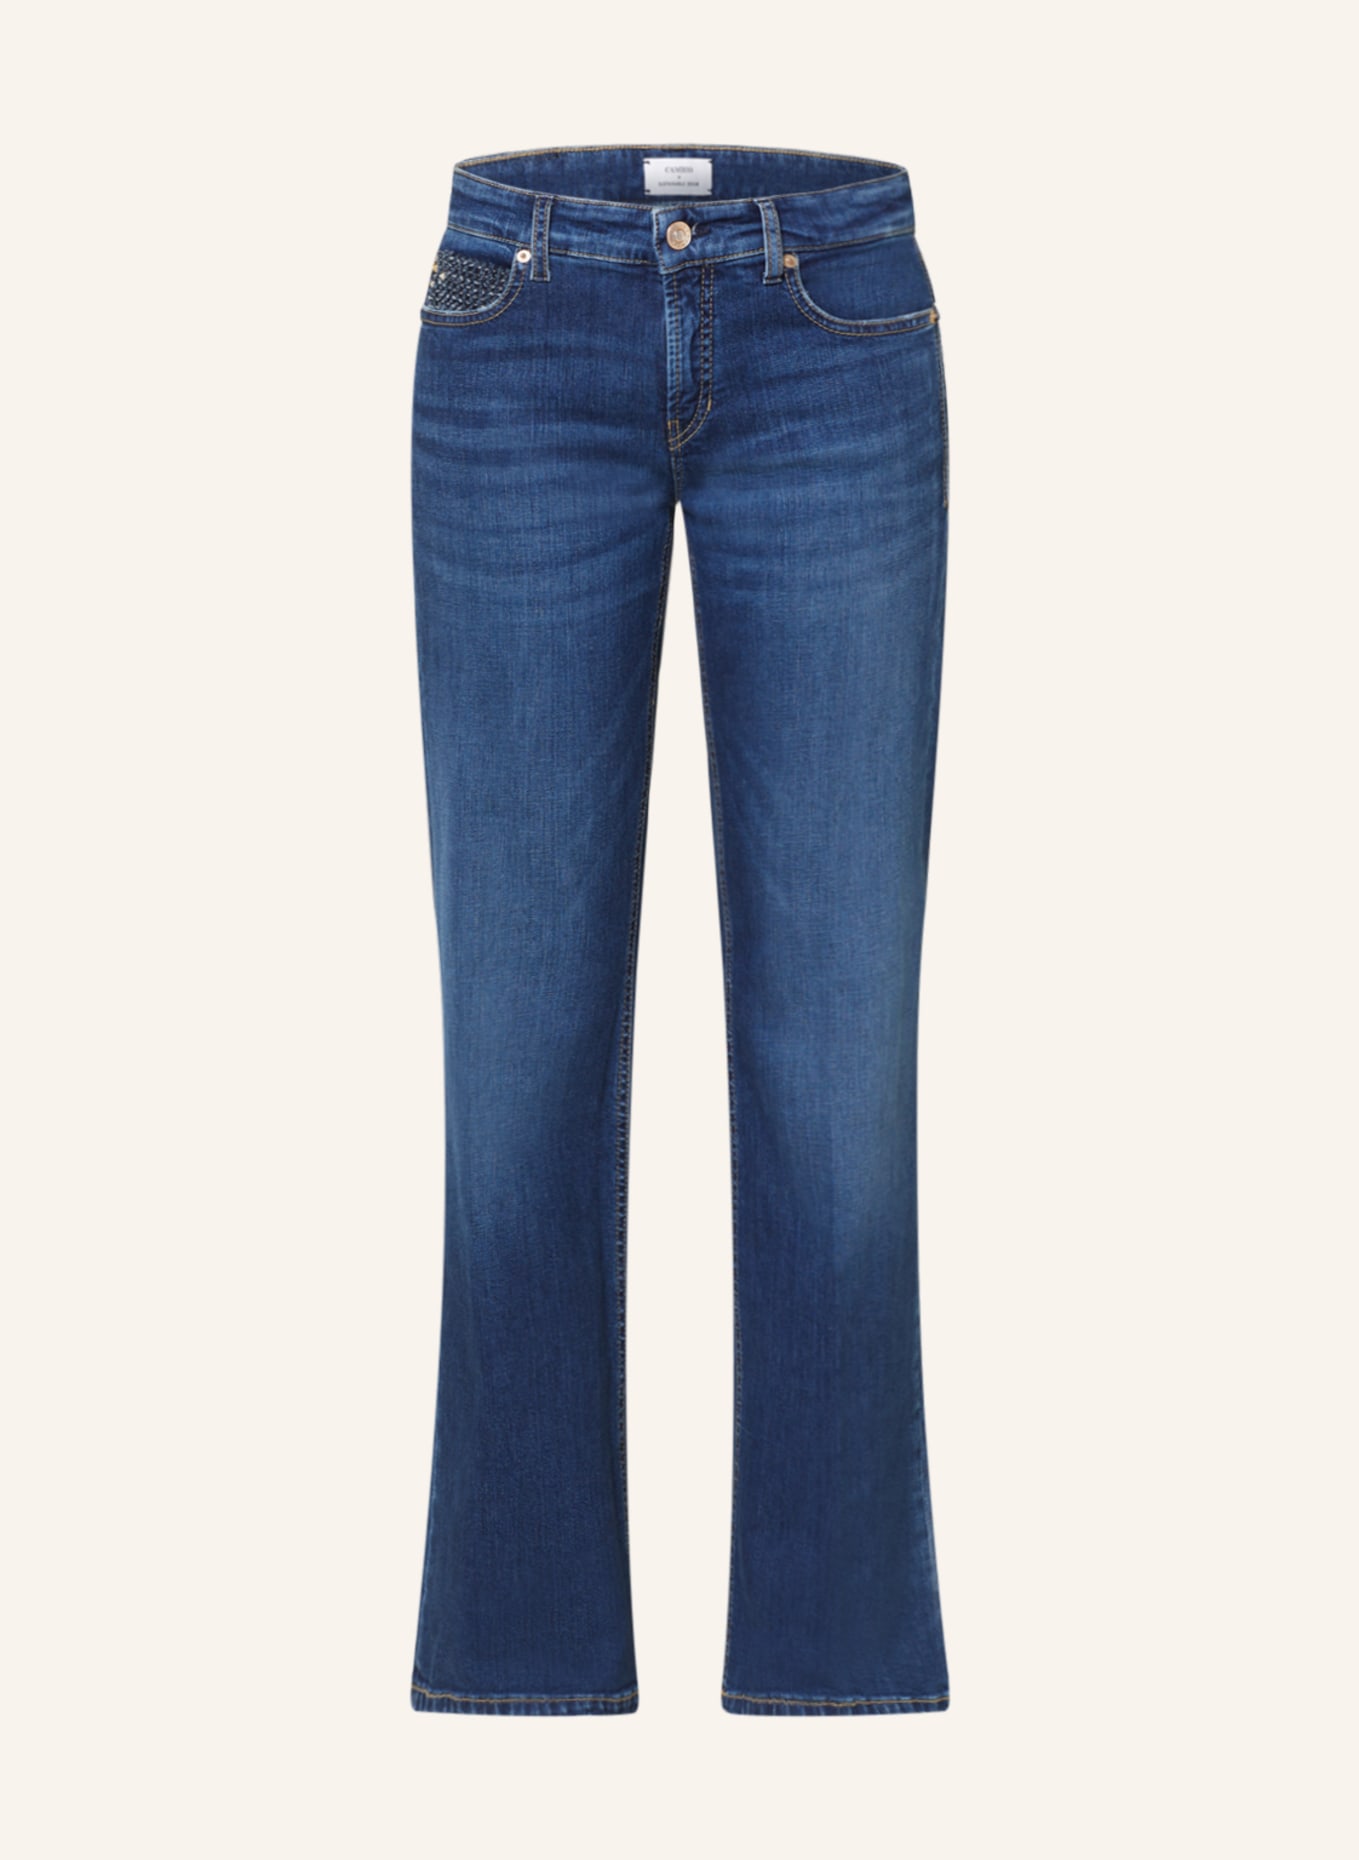 CAMBIO Flared Jeans TESS, Farbe: 5187 eco used (Bild 1)